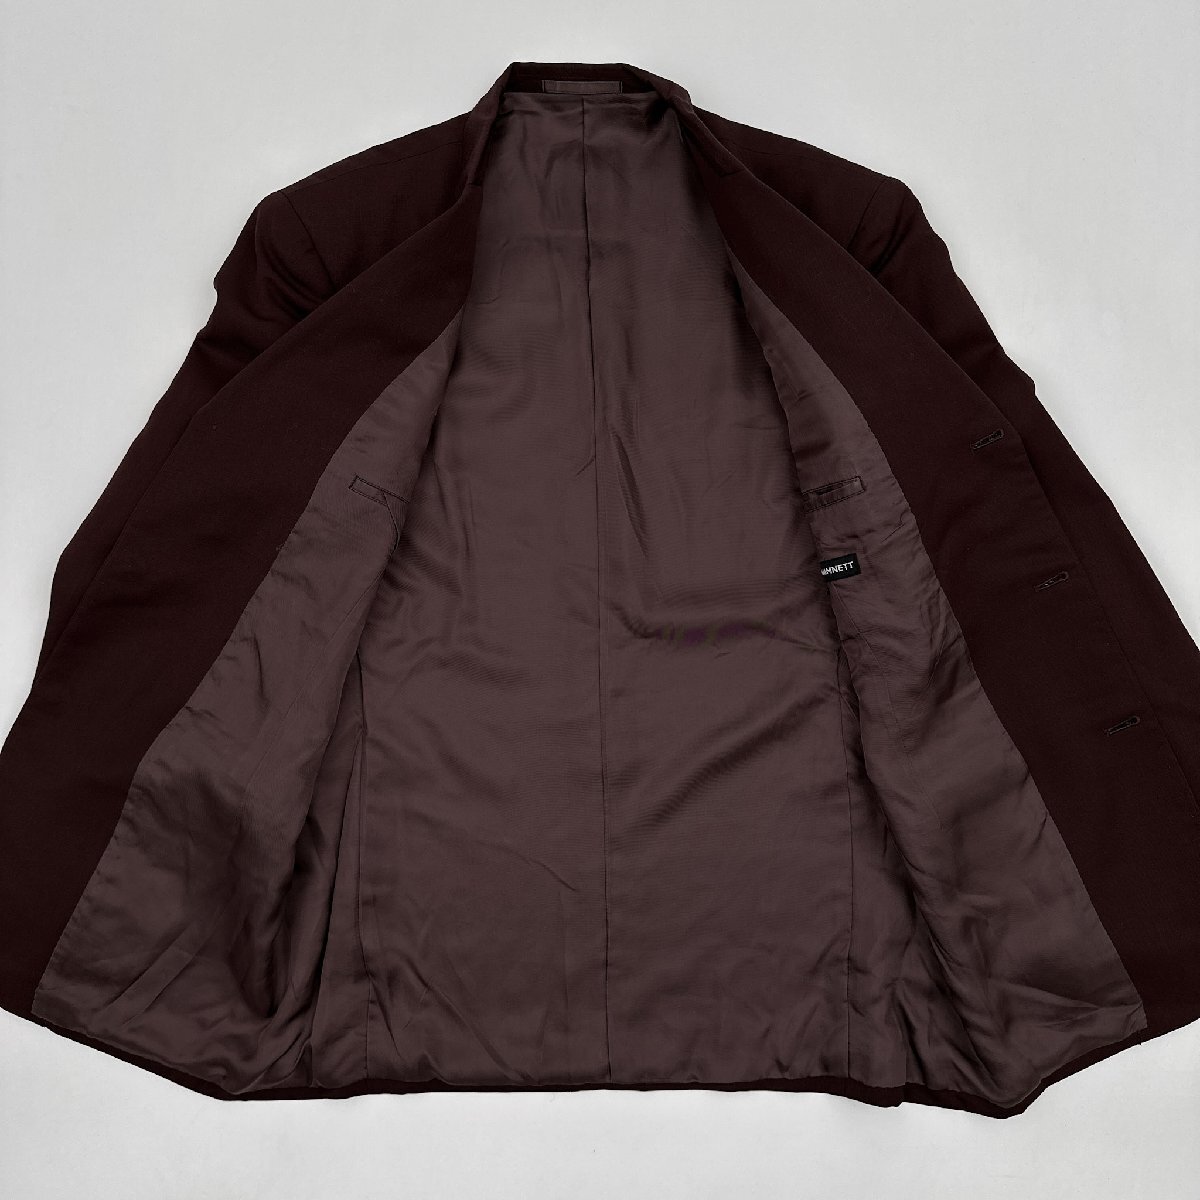 90s Vintage the first period *KATHARINE HAMNETT Katharine Hamnett 3B tailored jacket size L / black tag / red light brown group 